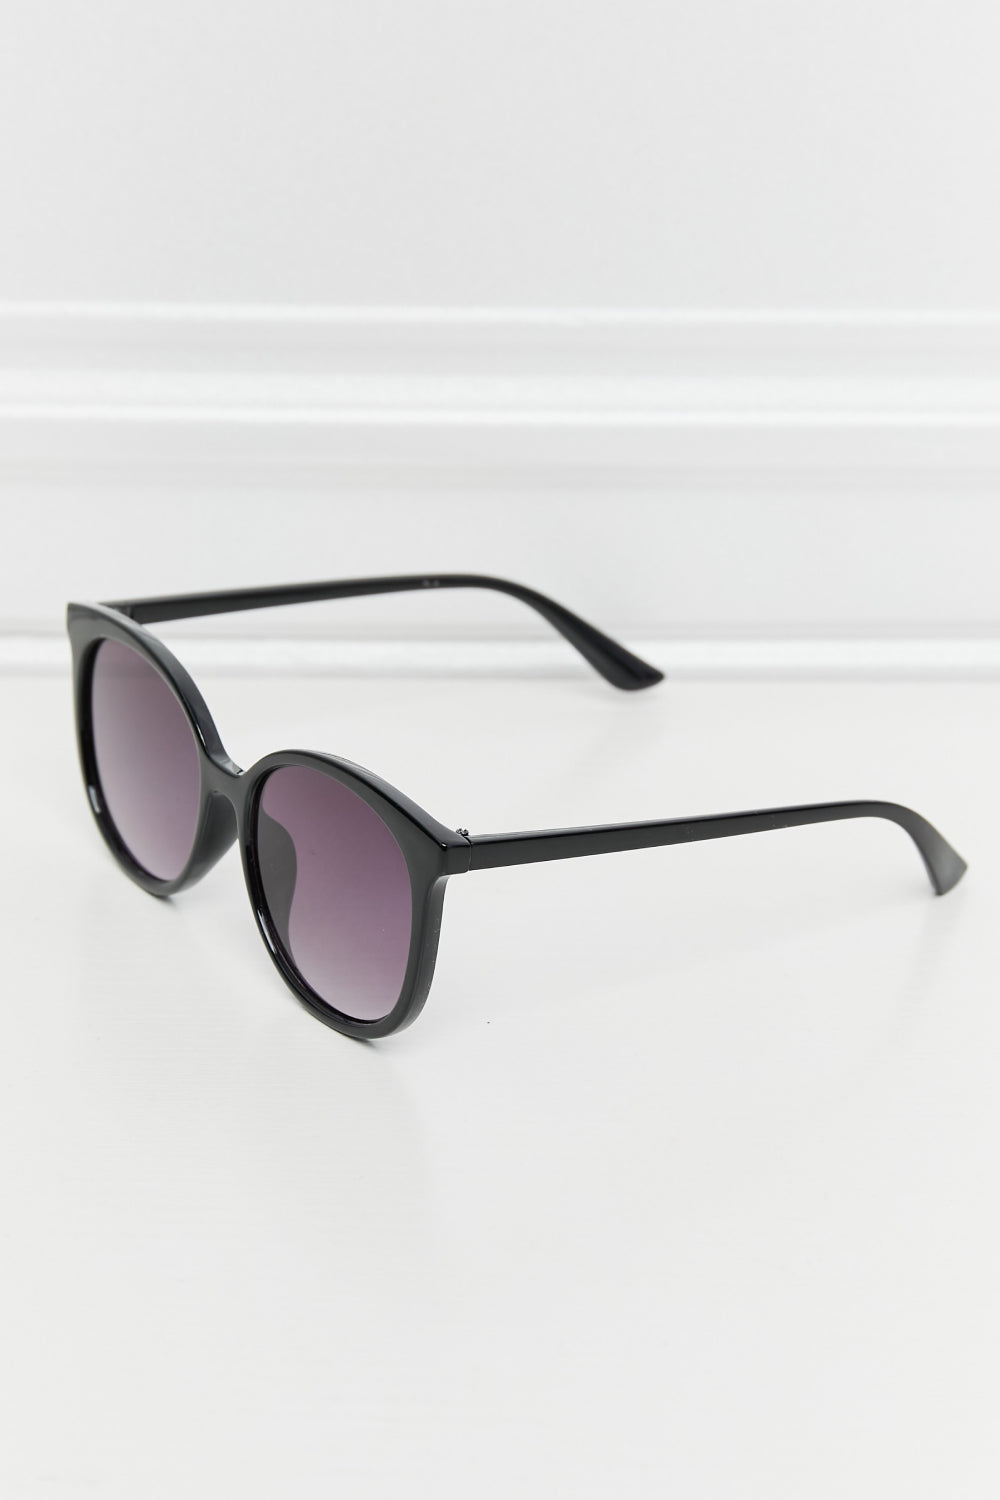 Polycarbonate Frame Full Rim Sunglasses - The Fashion Unicorn